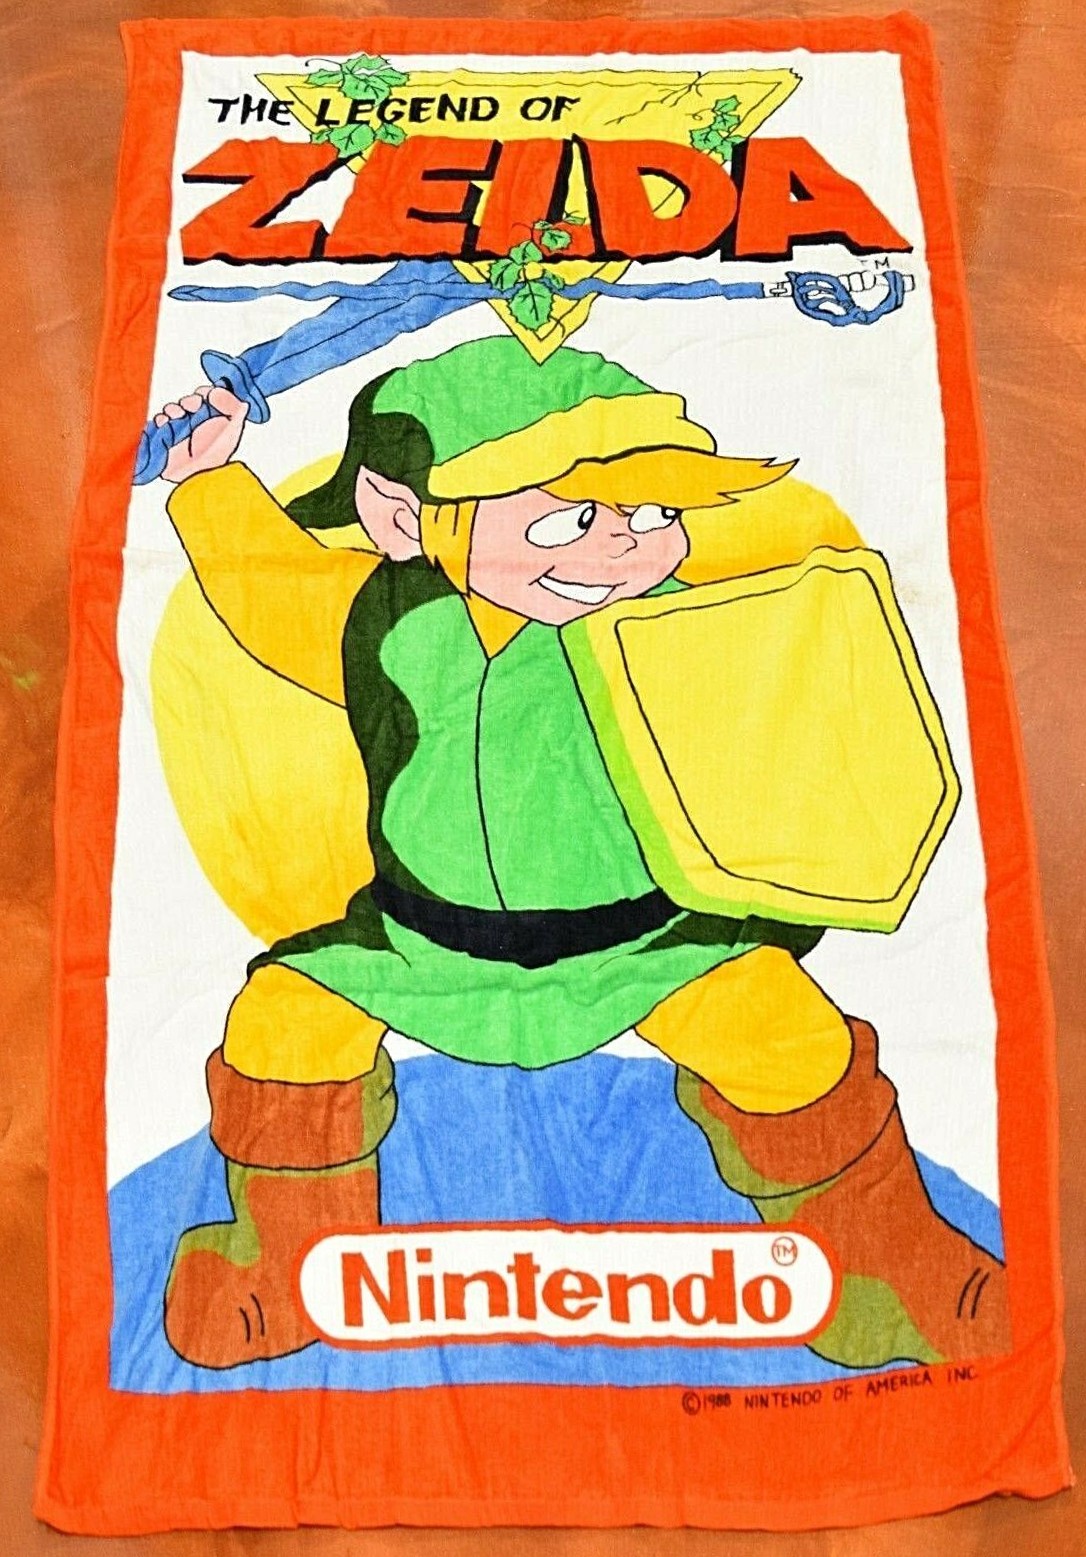 Scratch Card (Zelda Screen 2) by TOPPS, USA 1989.